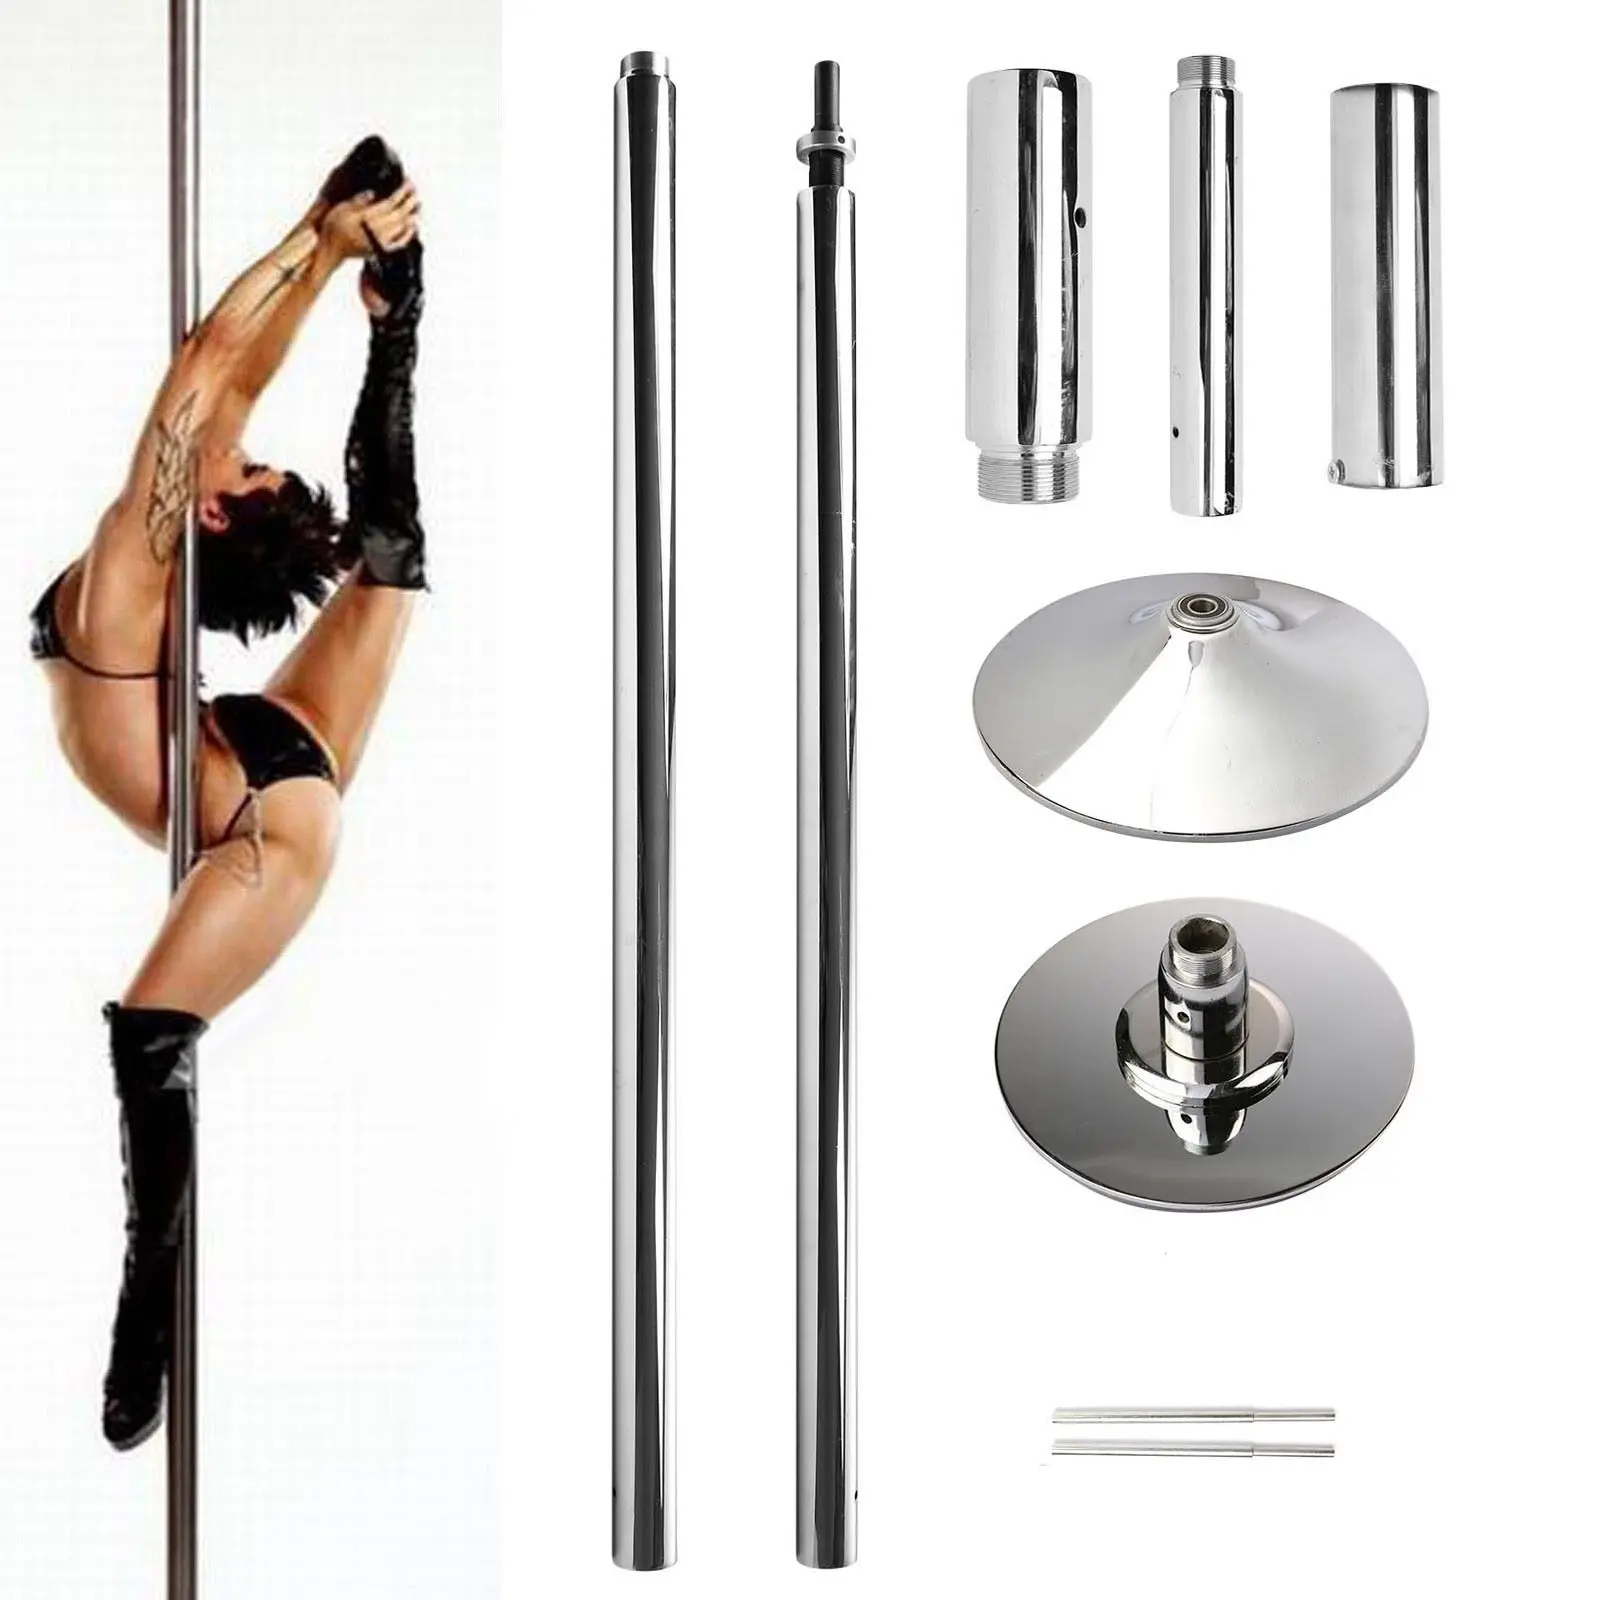 45mm Chrome Dance Pole Stripper Pole Dance Exercise Equipment